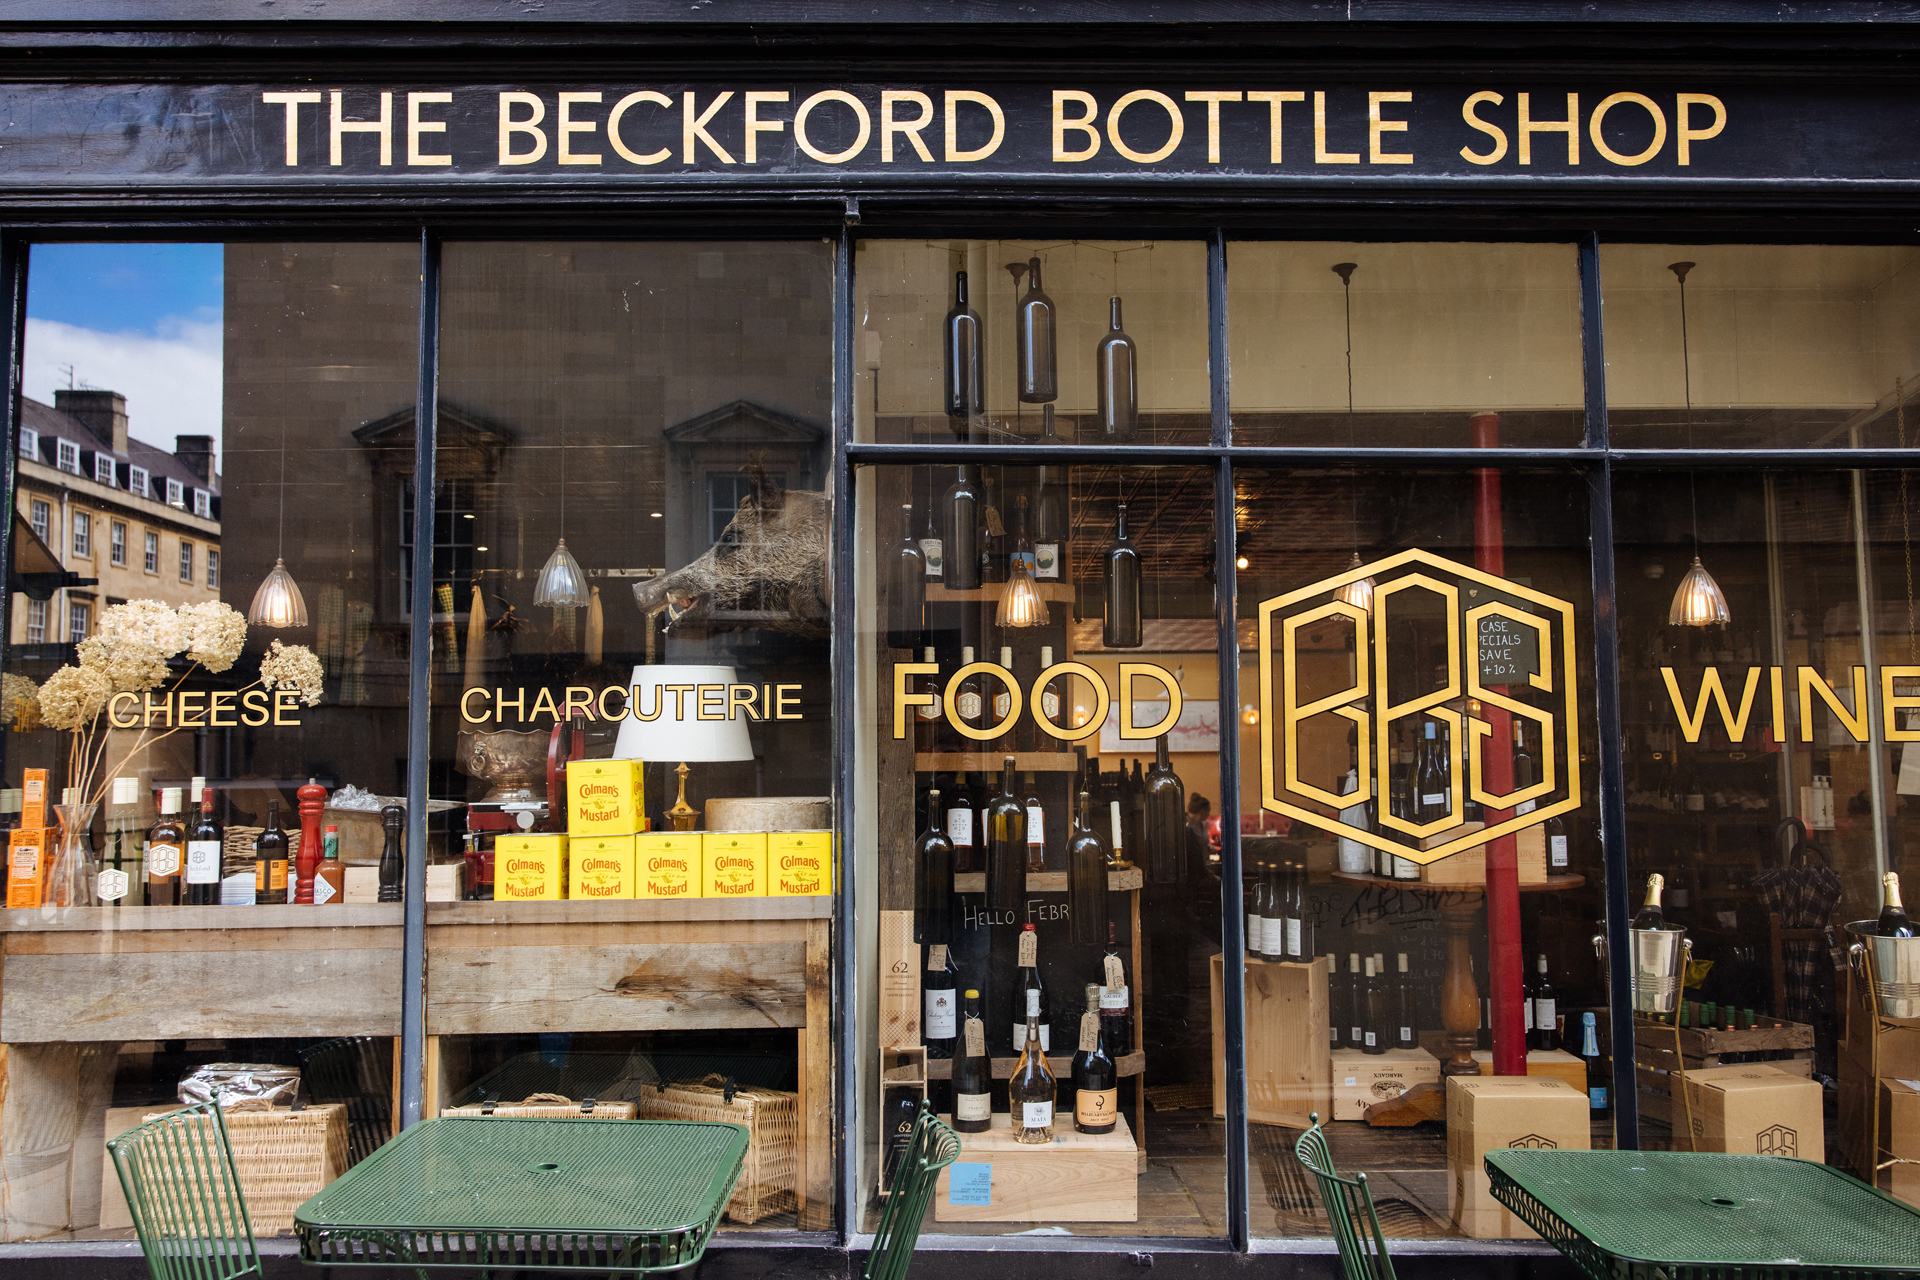 Exterior of the Beckford Bottle Shop in Bath